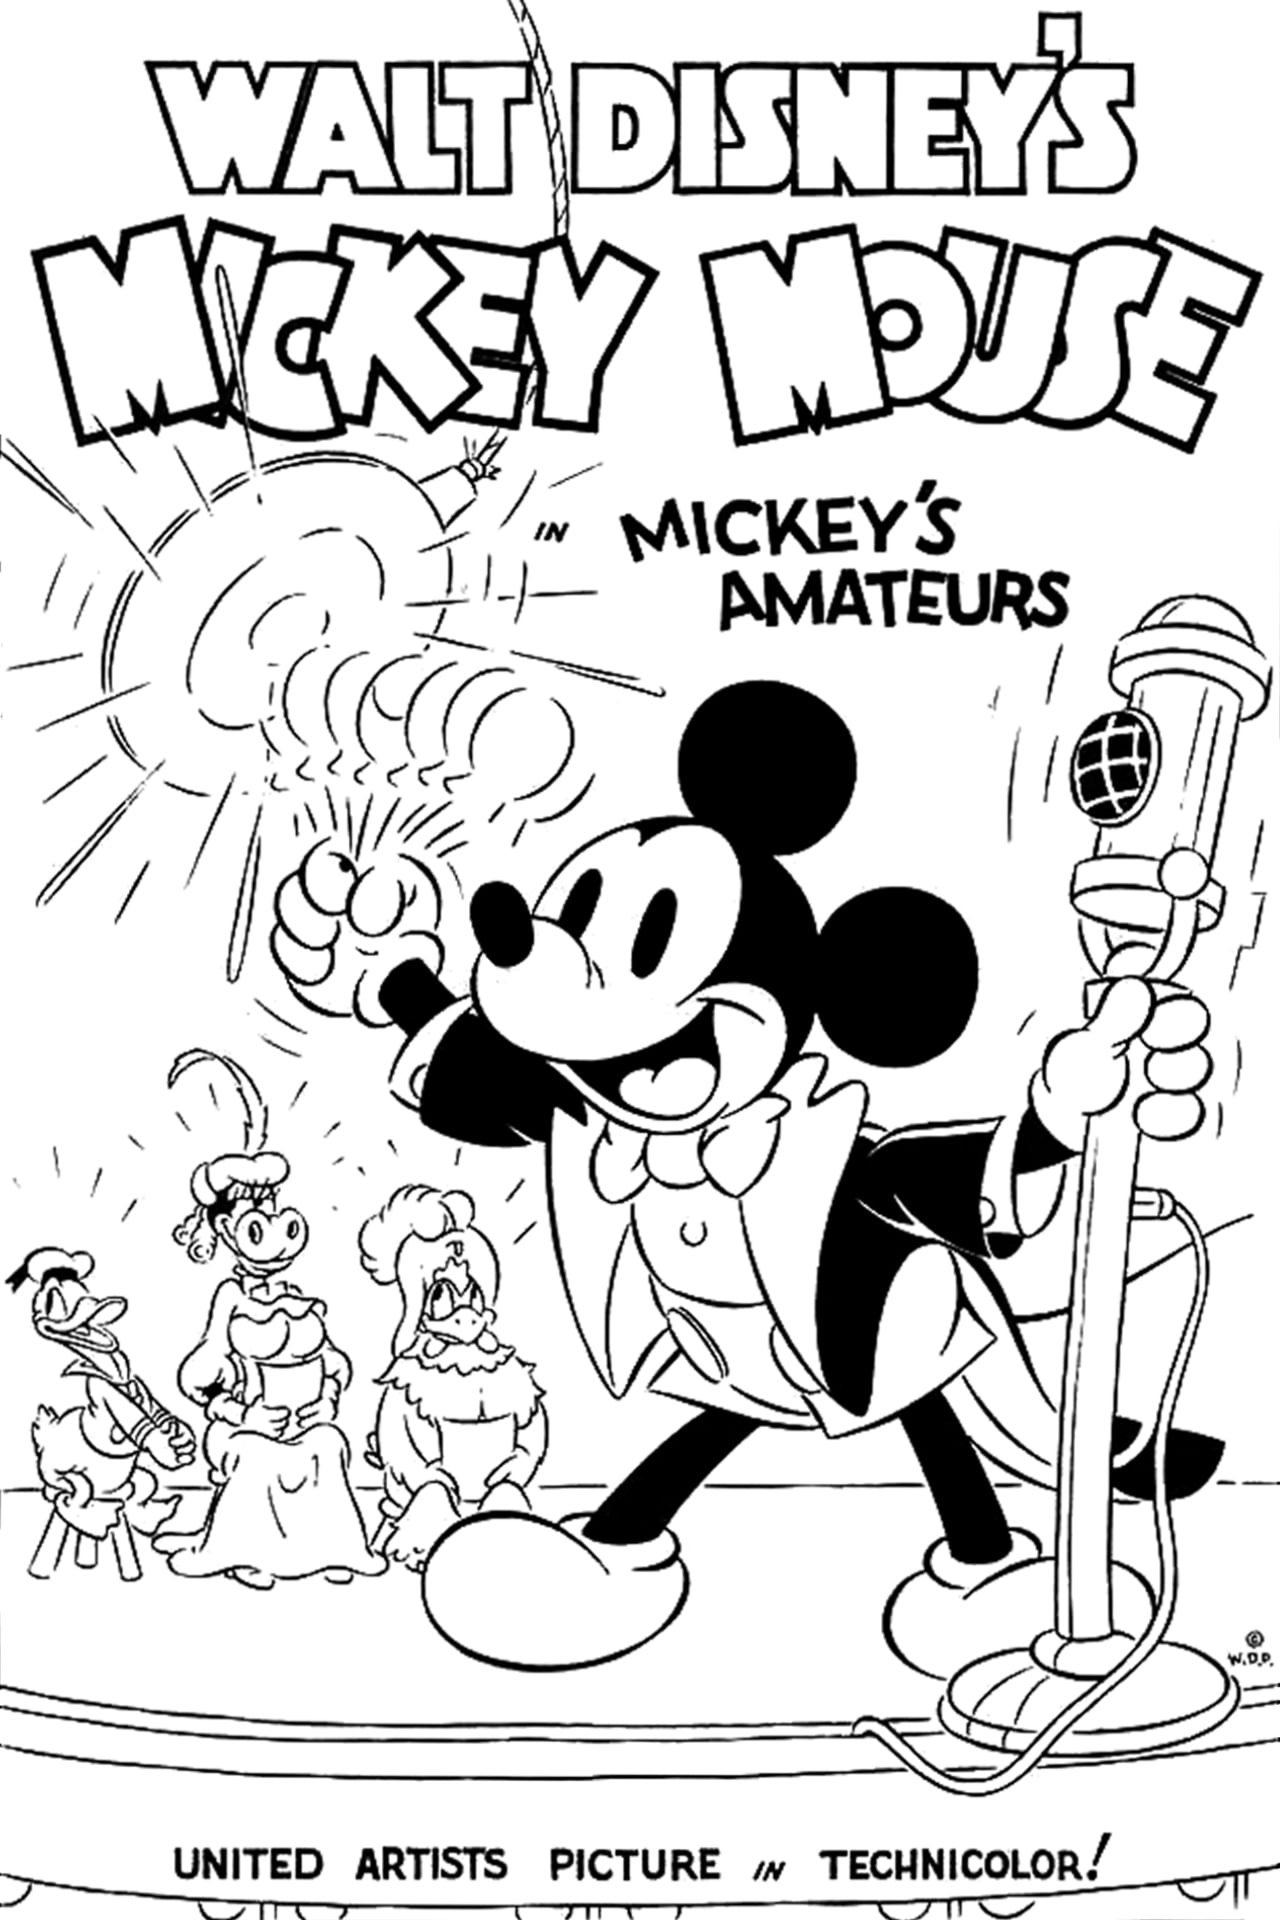 Mickey's Amateurs (1937)